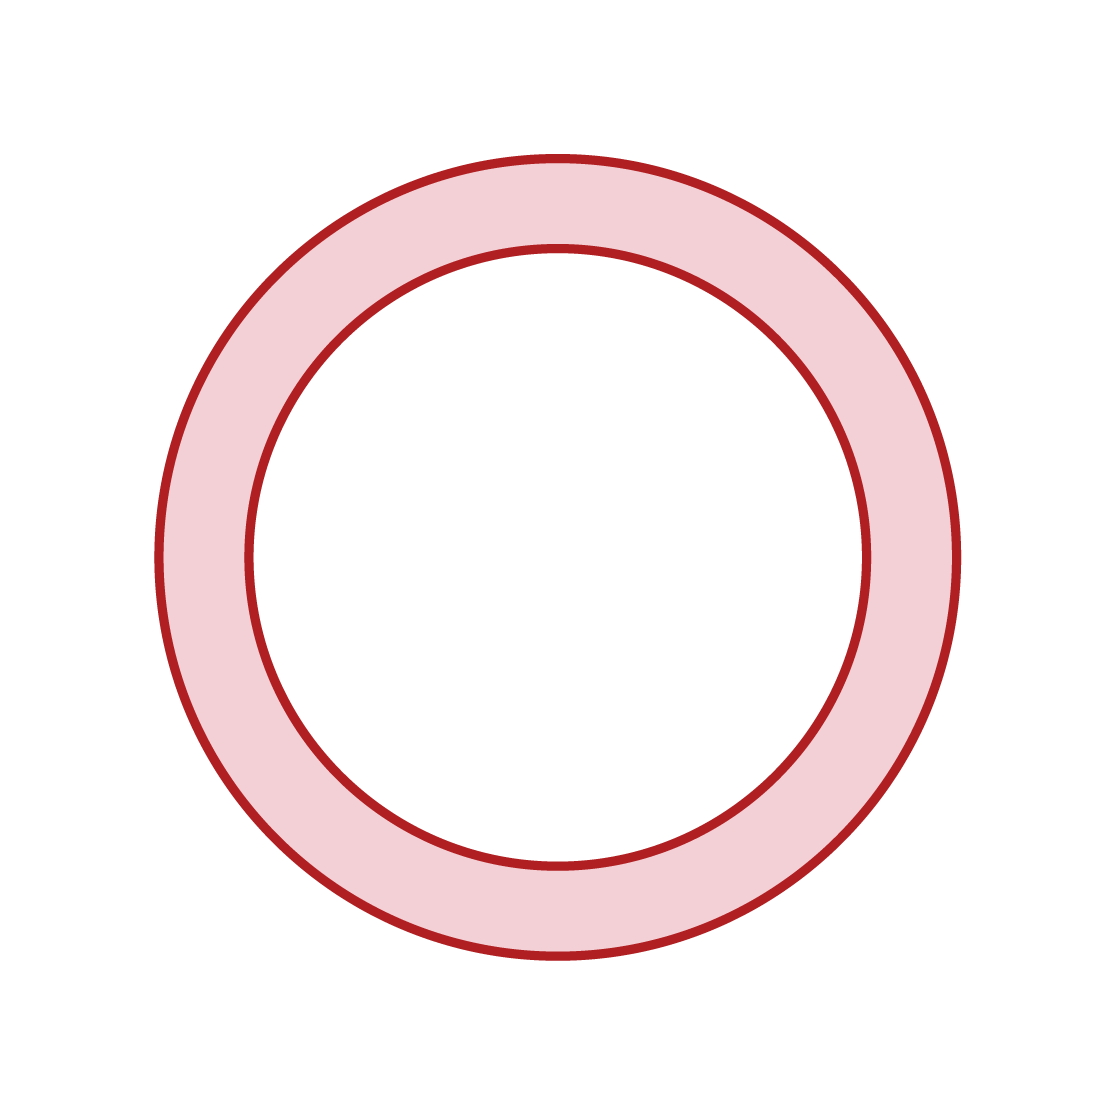 Illustration of a circle